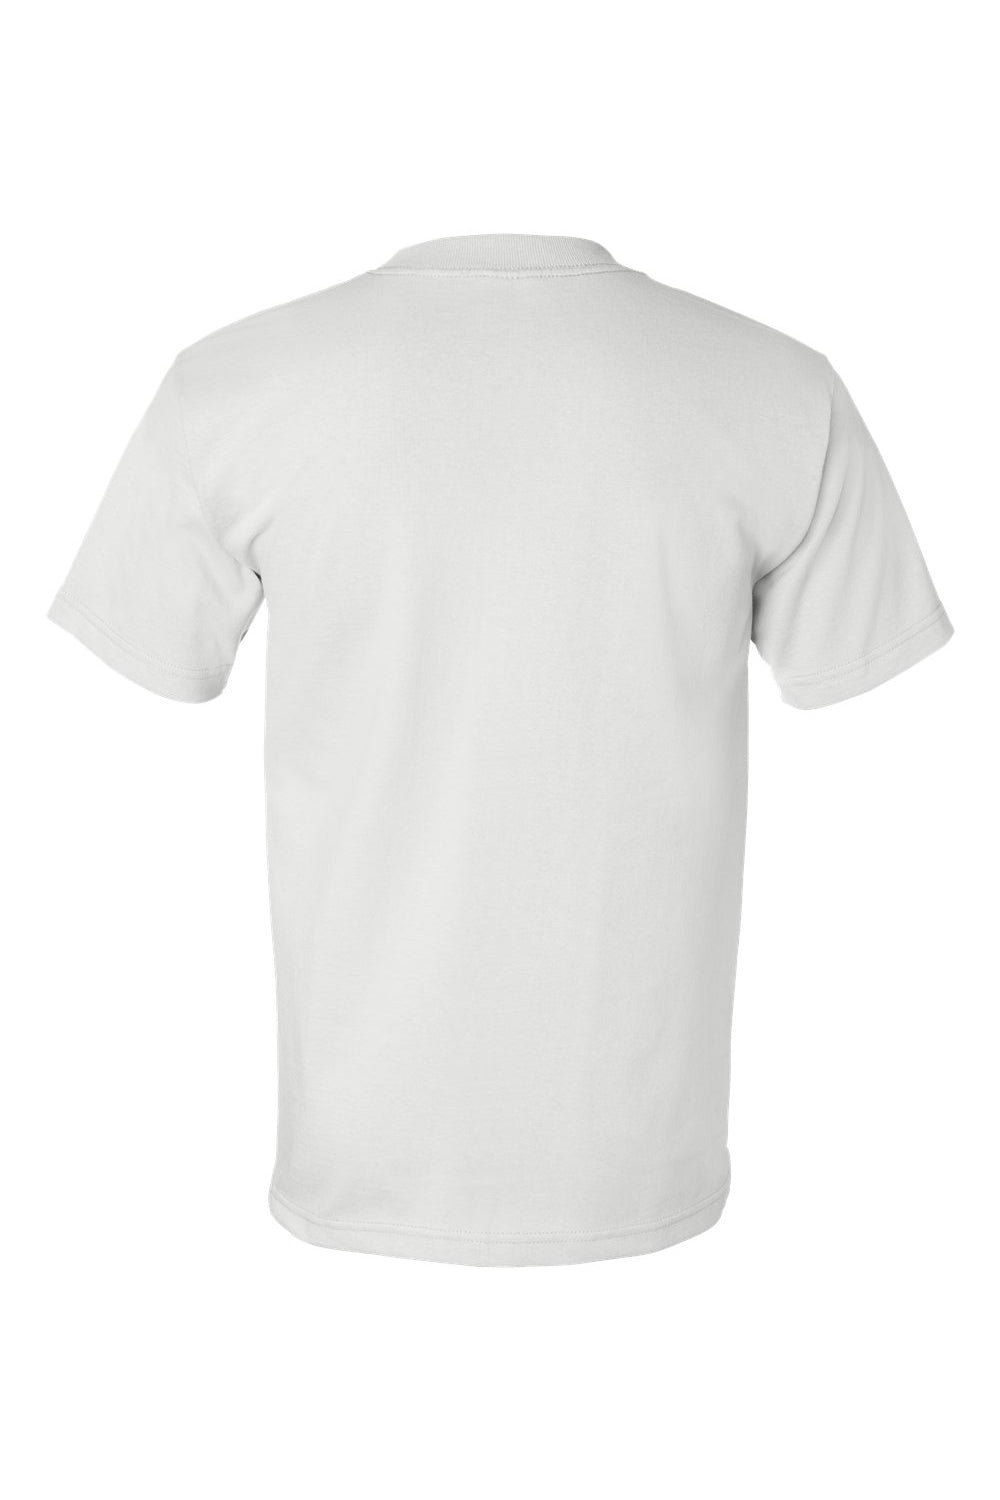 Bayside BA5100 Mens USA Made Short Sleeve Crewneck T-Shirt White Flat Back